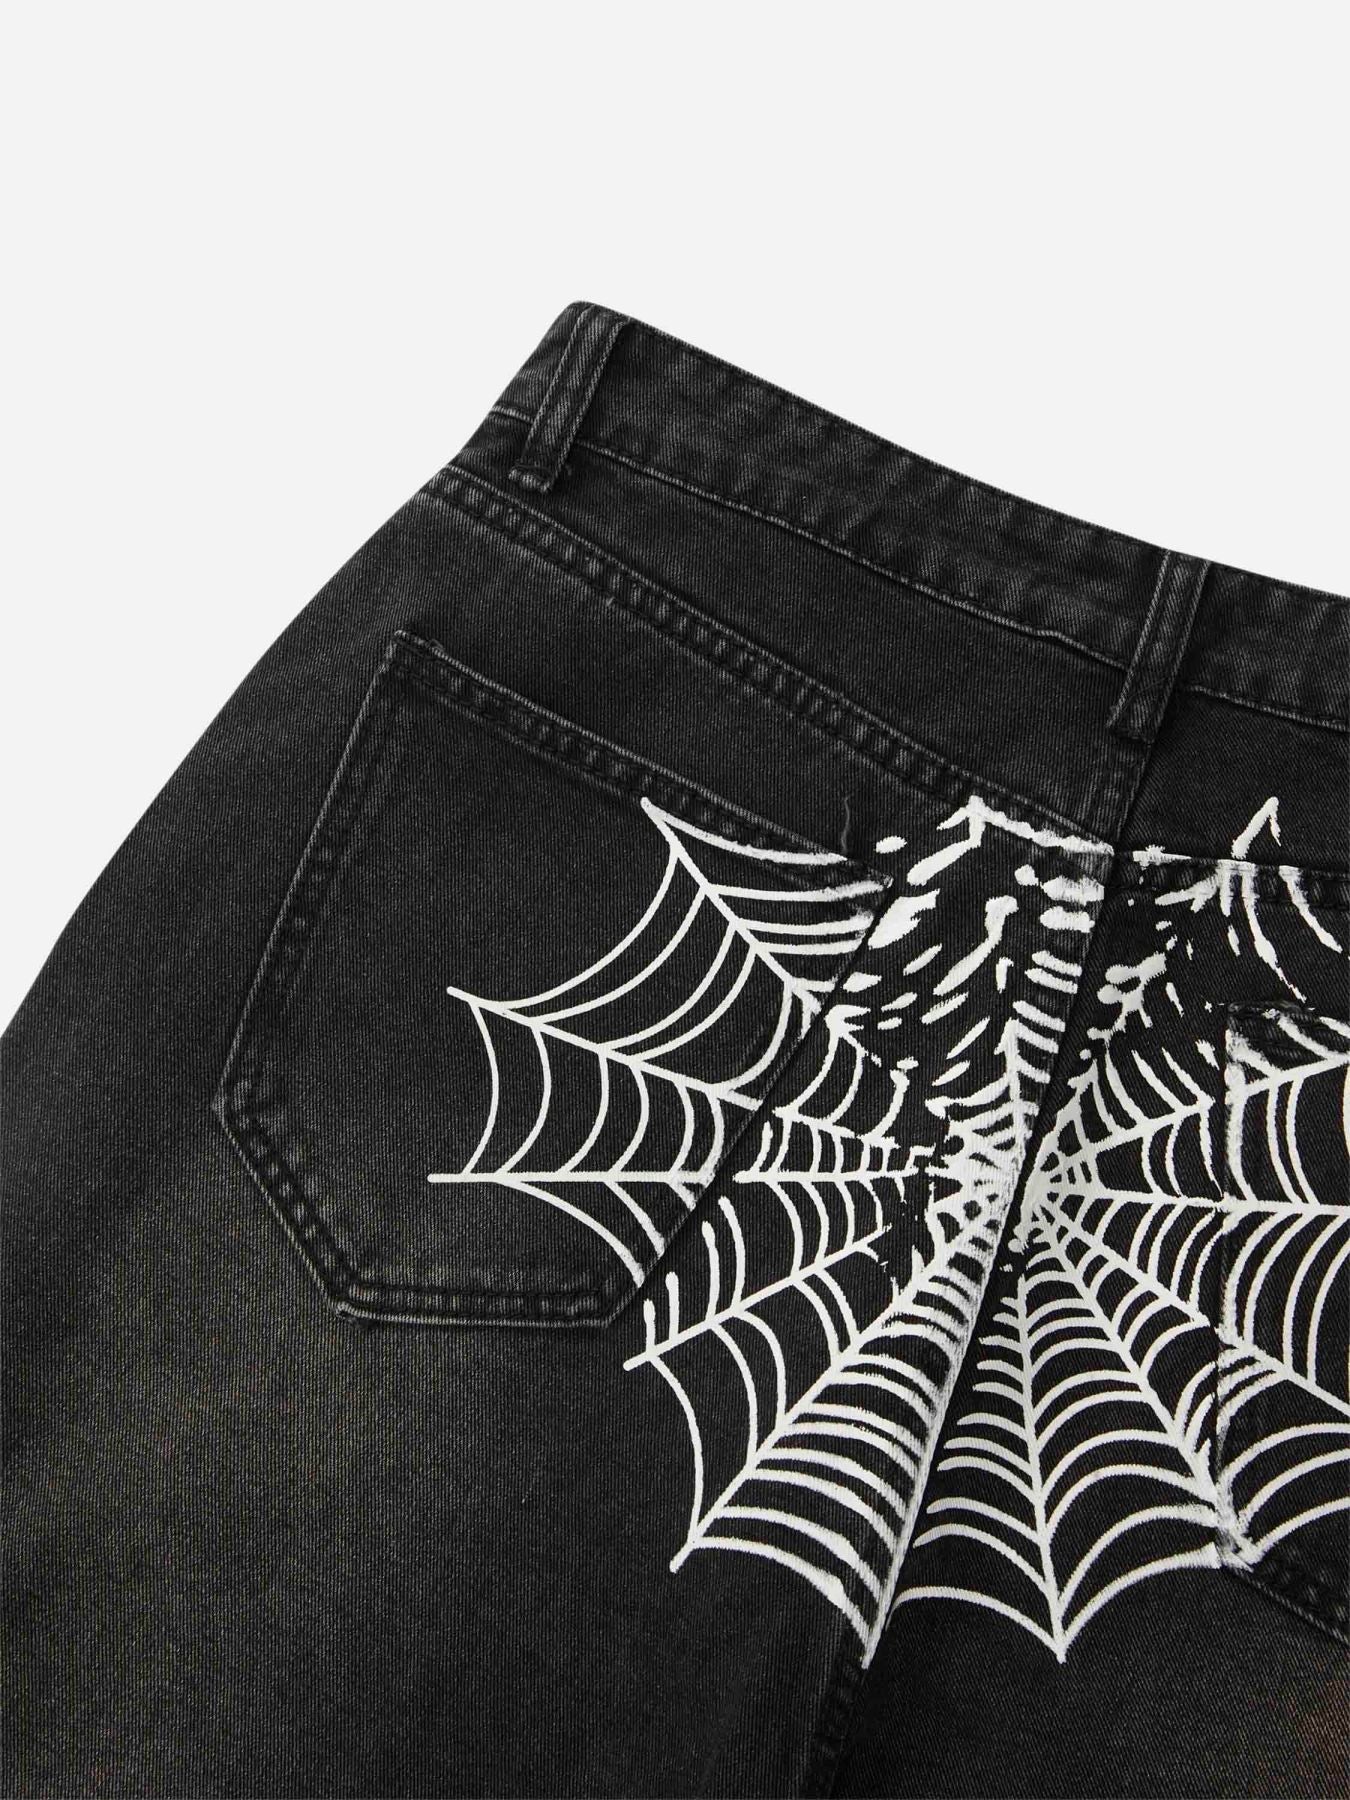 Sneakerland Spider Printed Jeans SP23052583D5